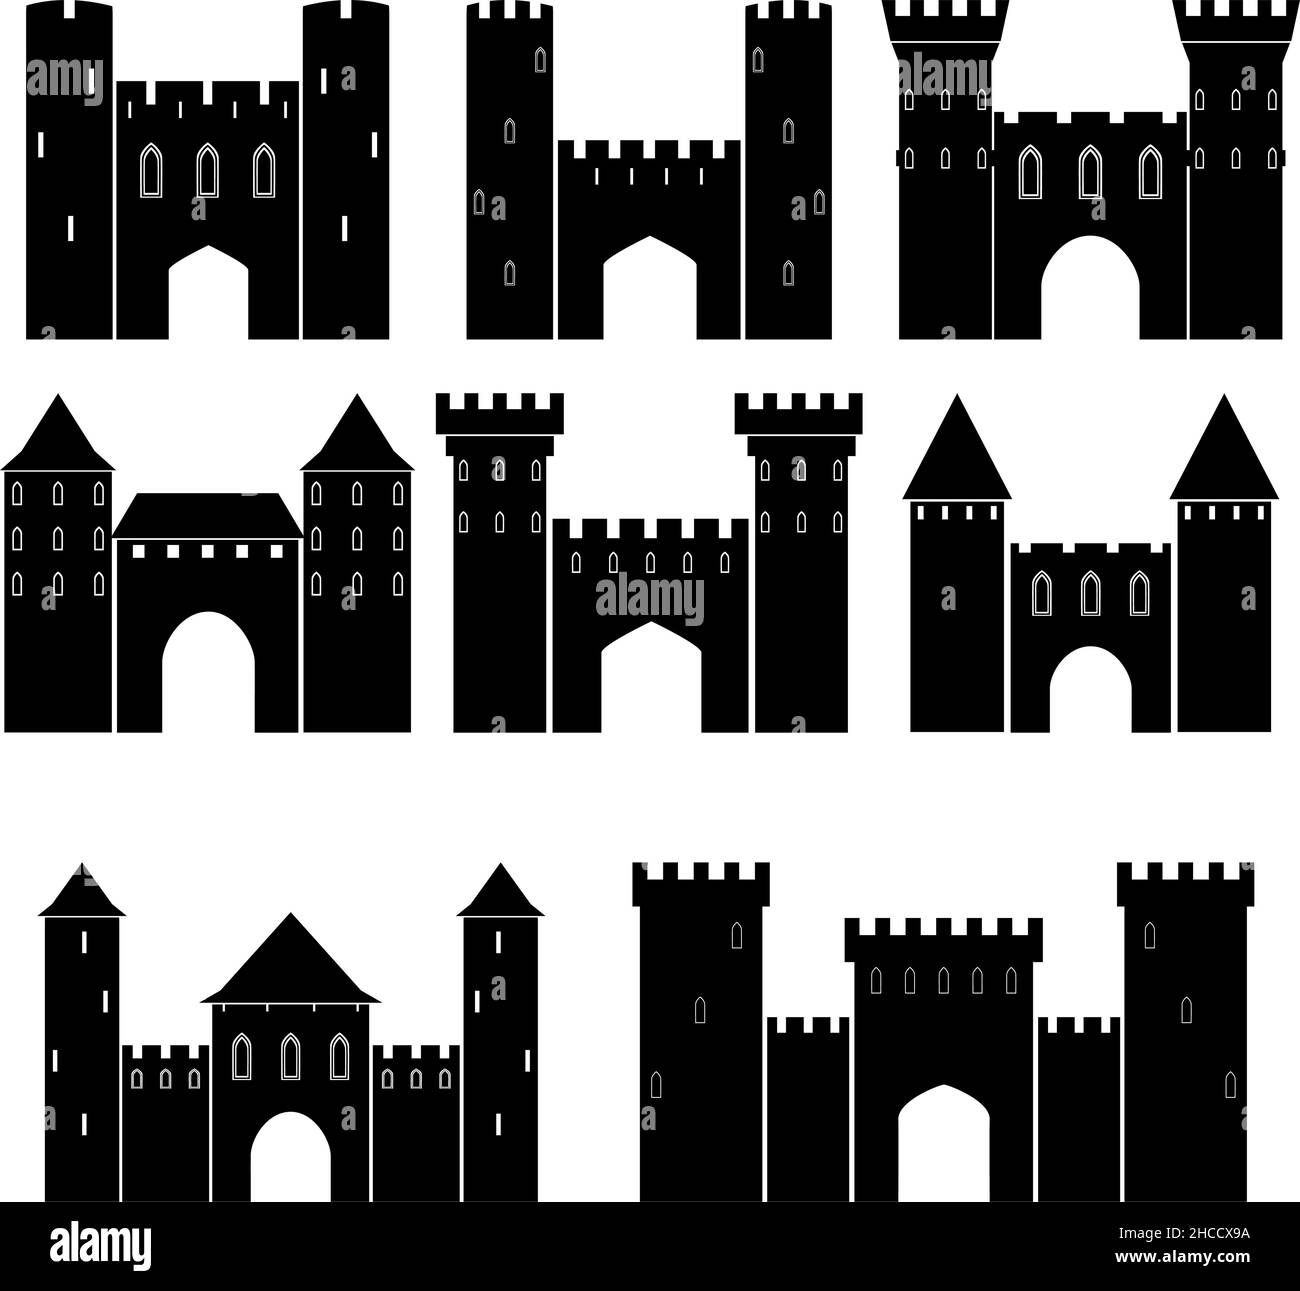 Insieme di castelli medievali, illustrazione vettoriale Illustrazione Vettoriale